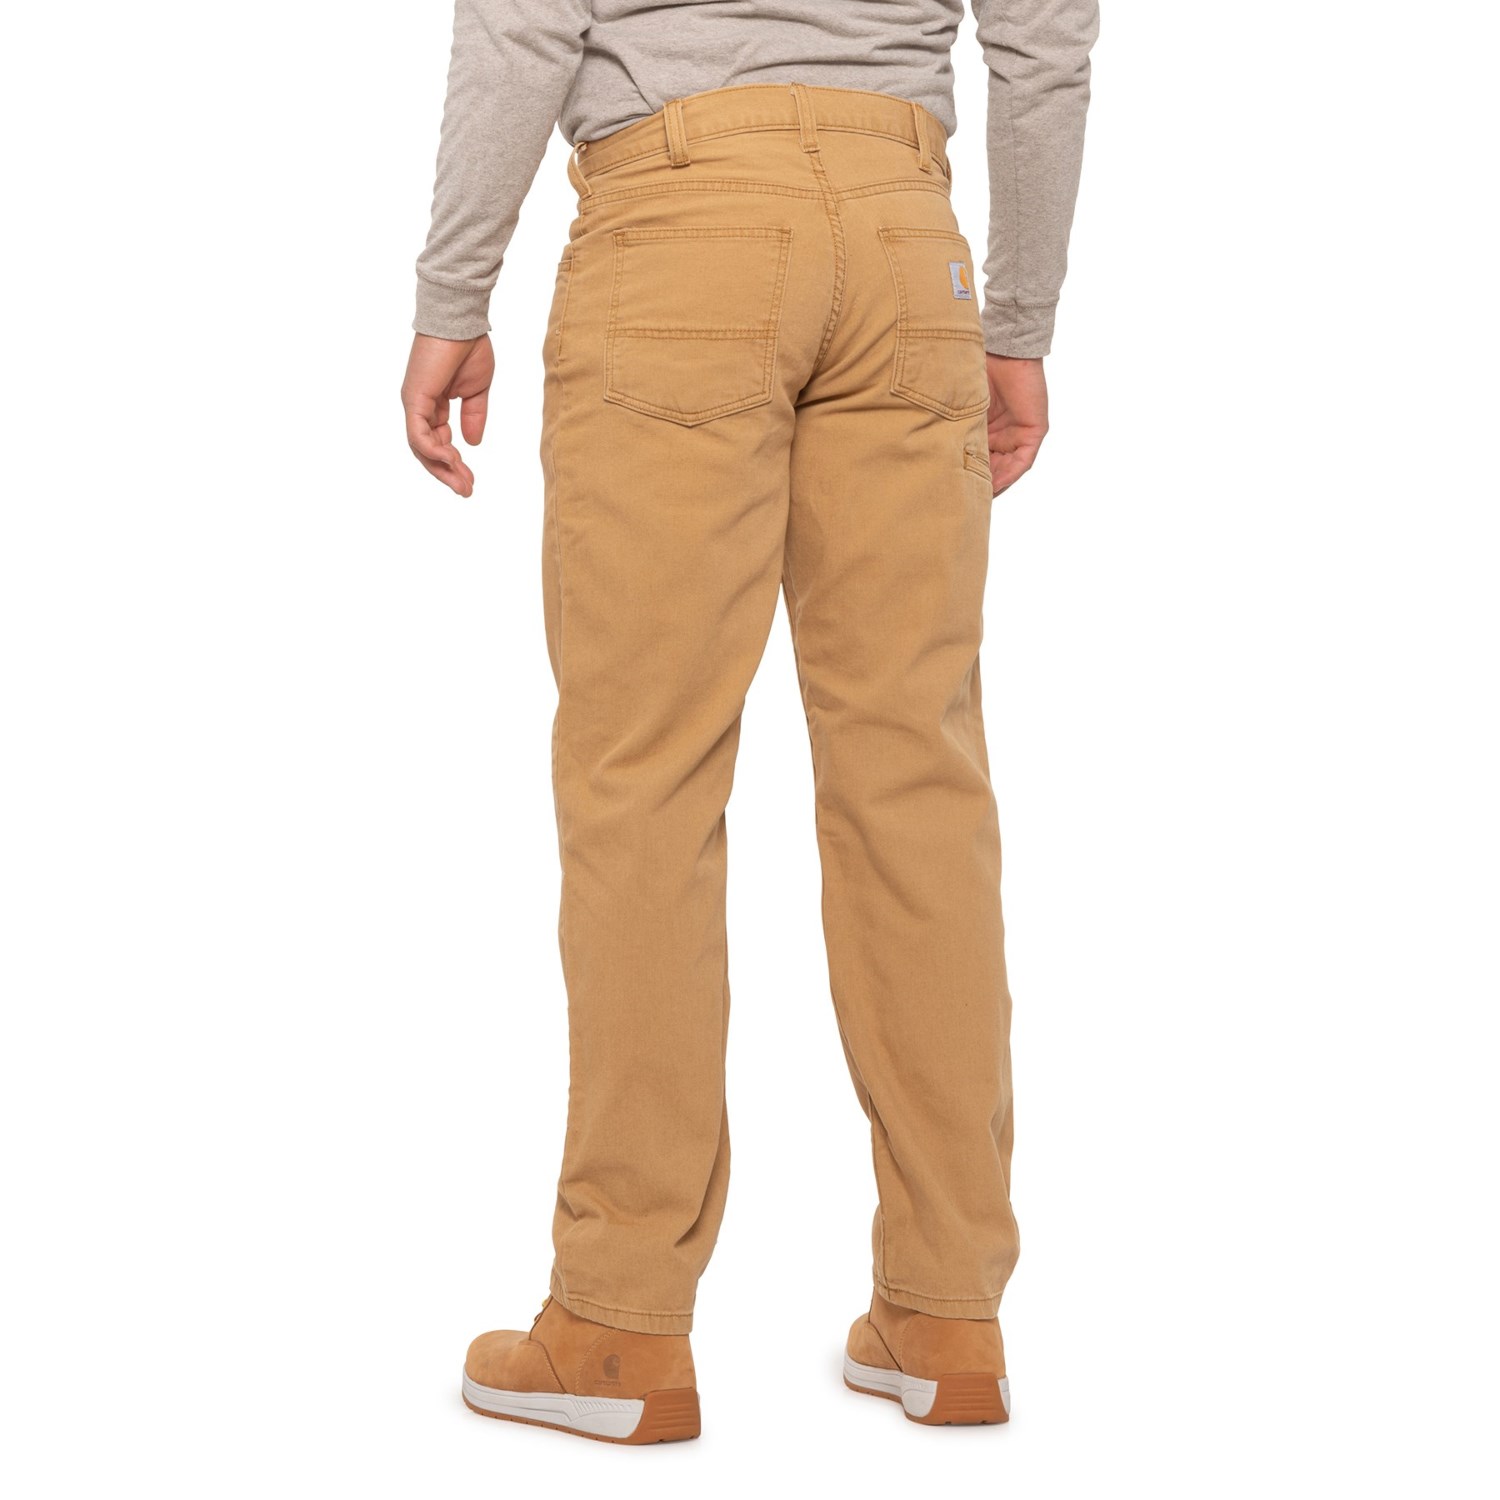 Carhartt 102517 Rugged Flex® Rigby Five-Pocket Pants - Factory Seconds